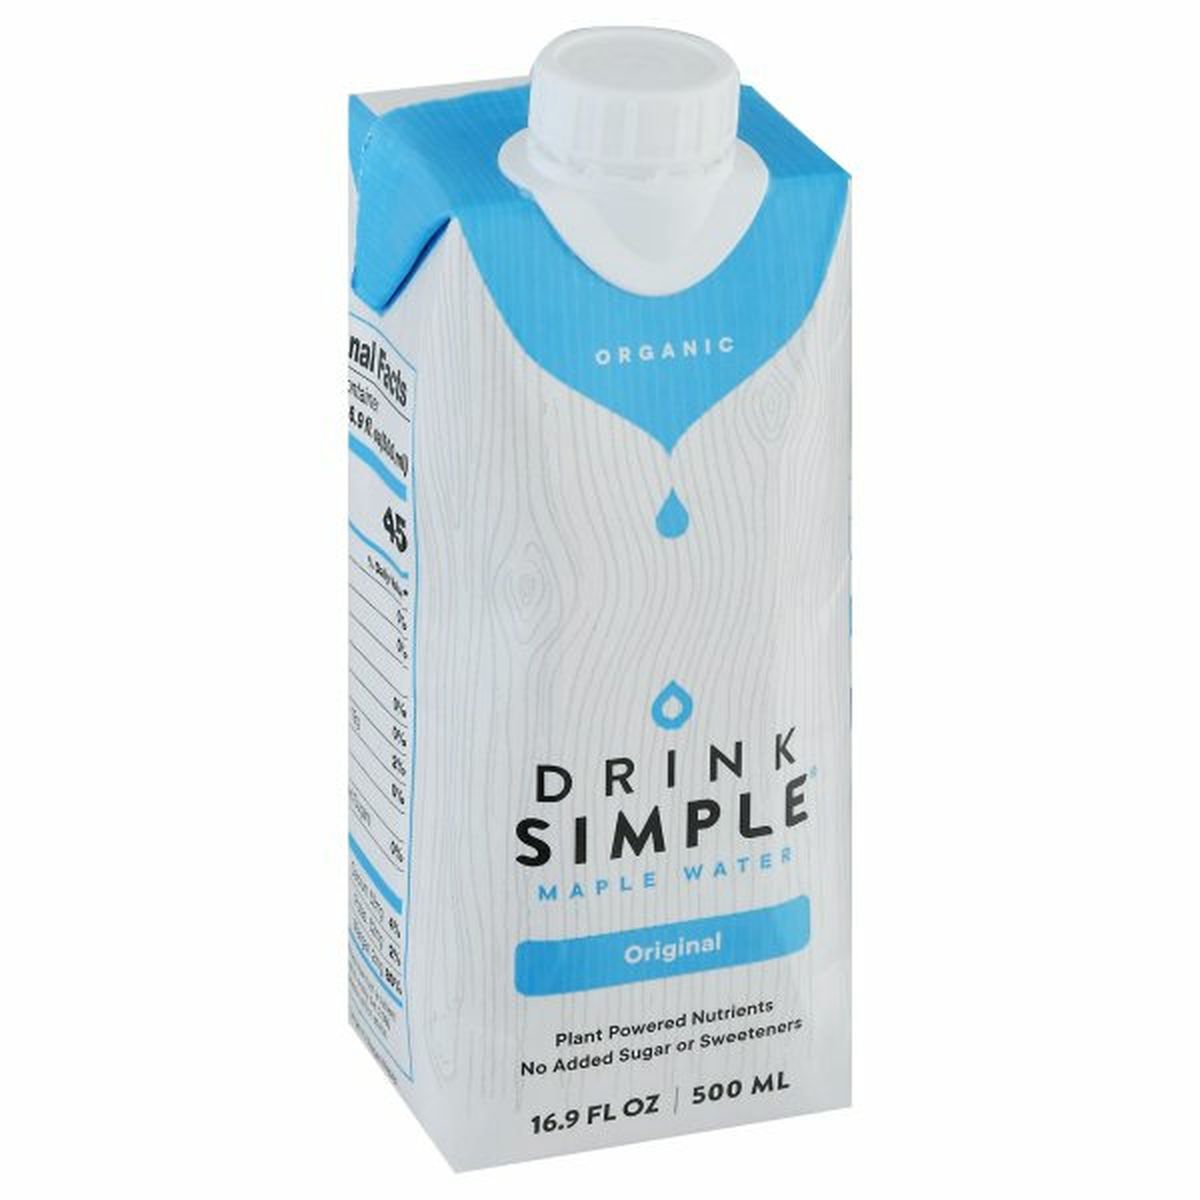 Calories in Drink Simple Maple Water, Organic, Original